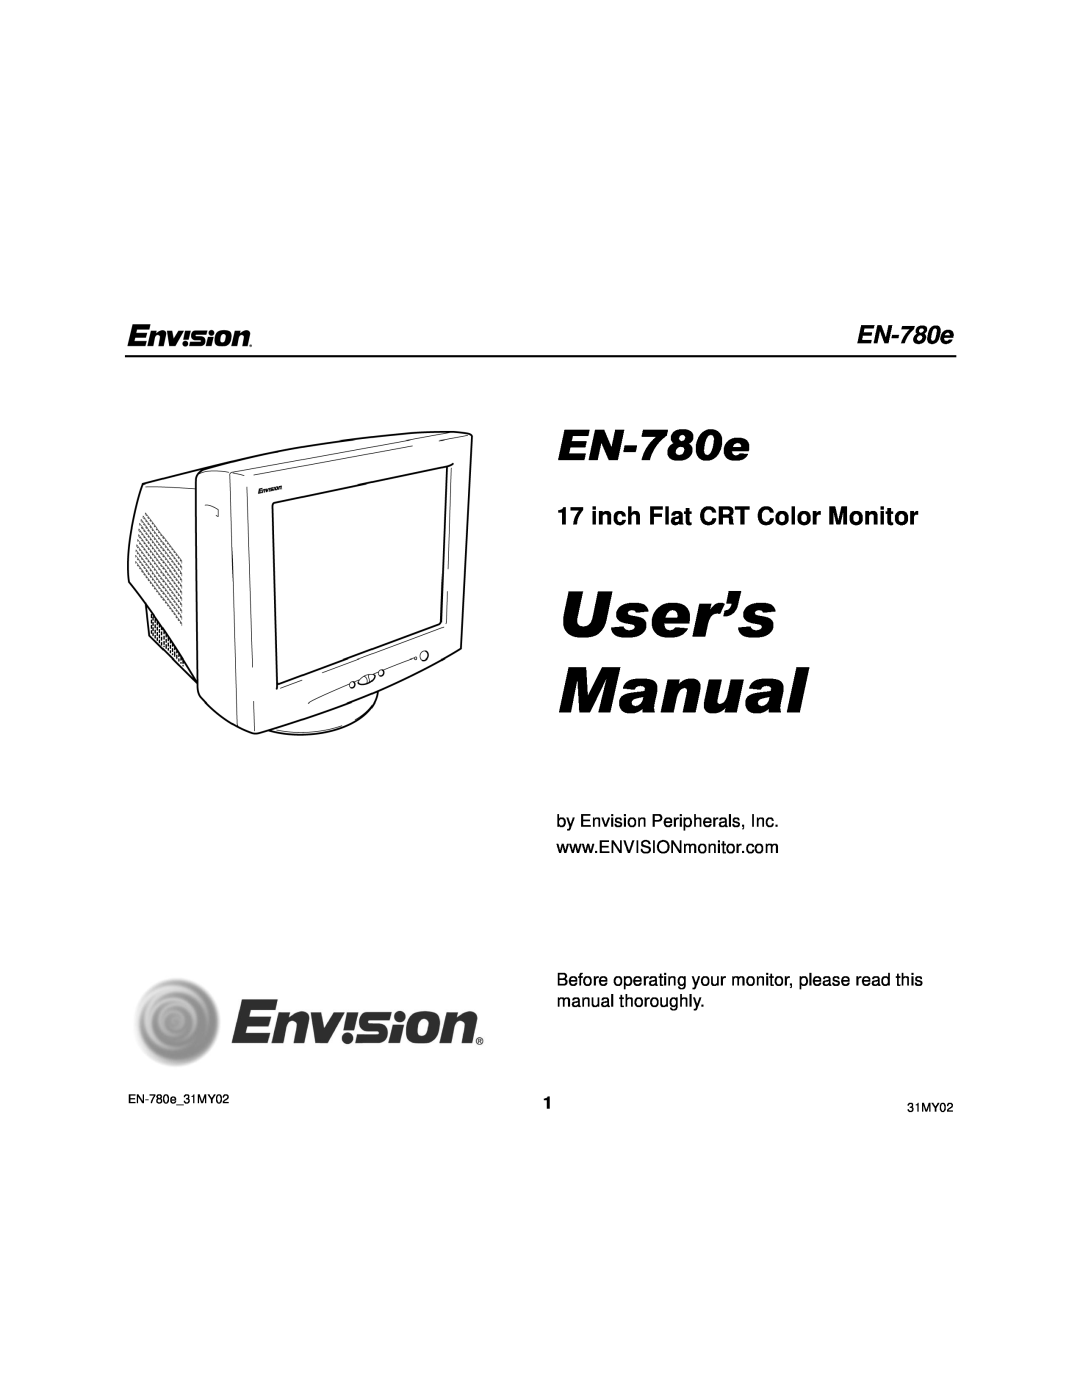 Envision Peripherals EN-780e 17, EN-780e_31MY02 user manual inch Flat CRT Color Monitor, User’s Manual, EN-780e31MY02 